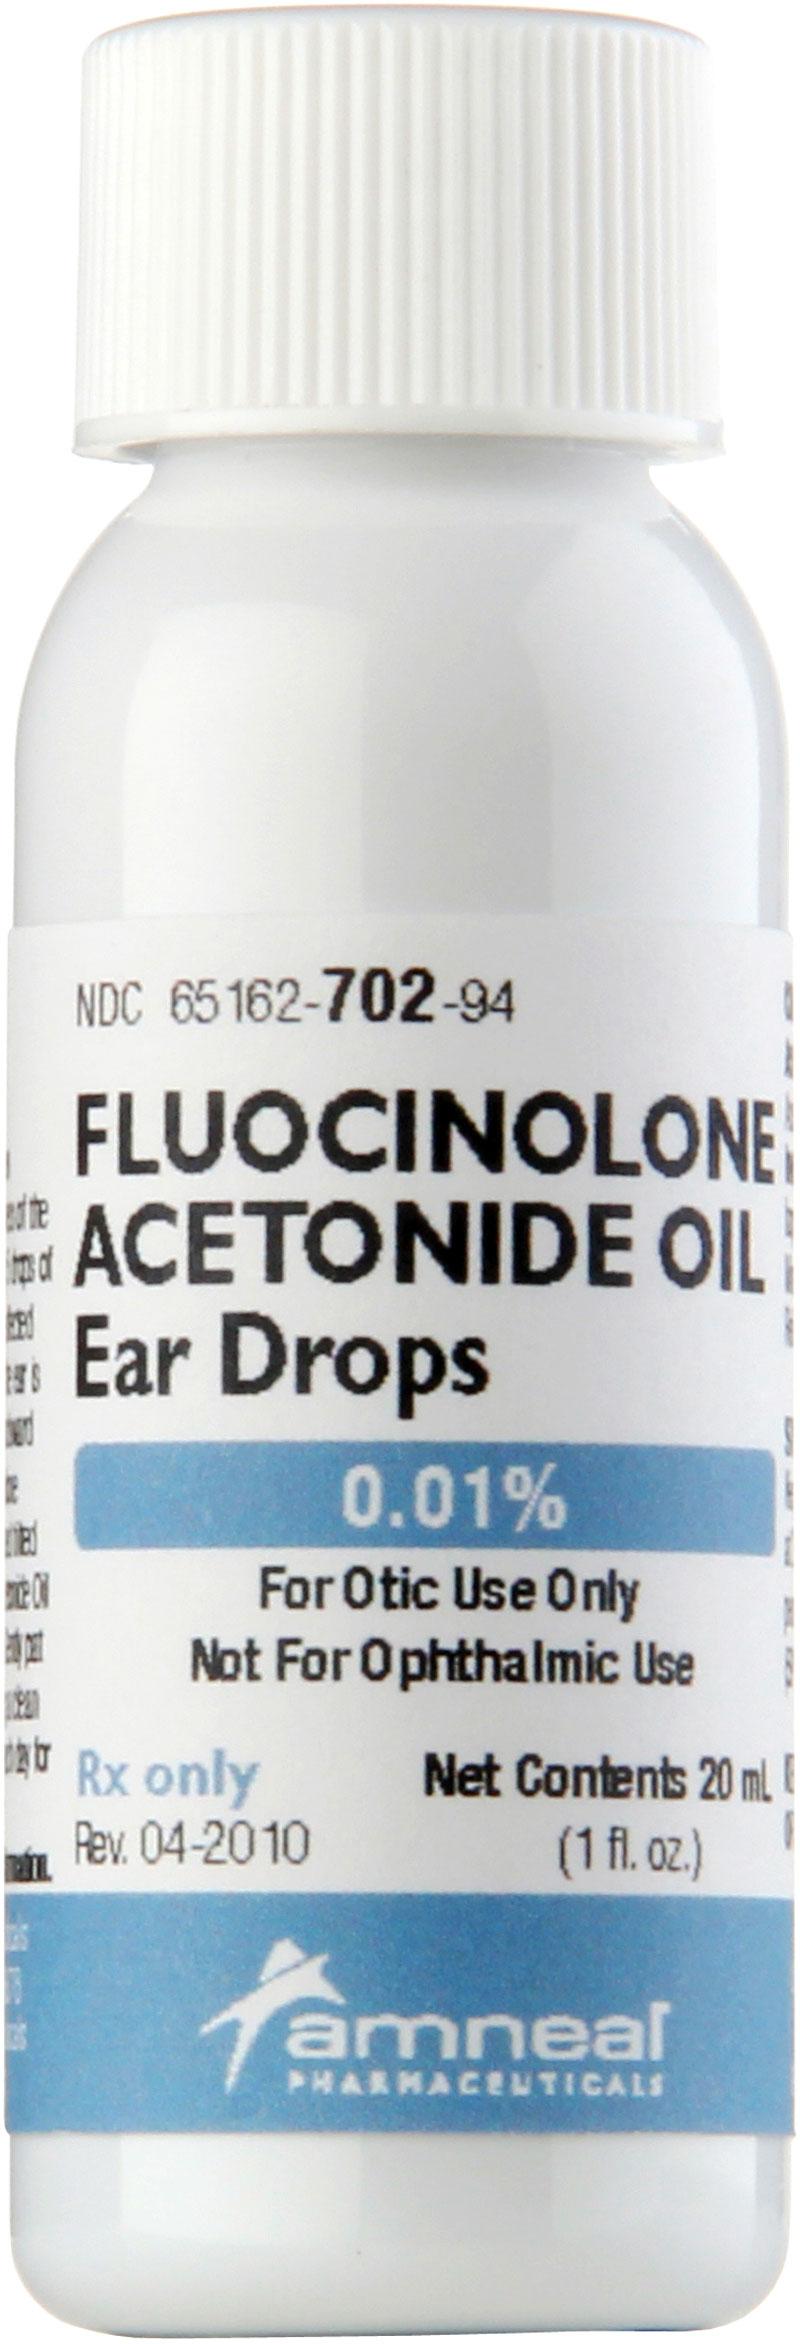 Fluocinolone Acetonide Ear Drops